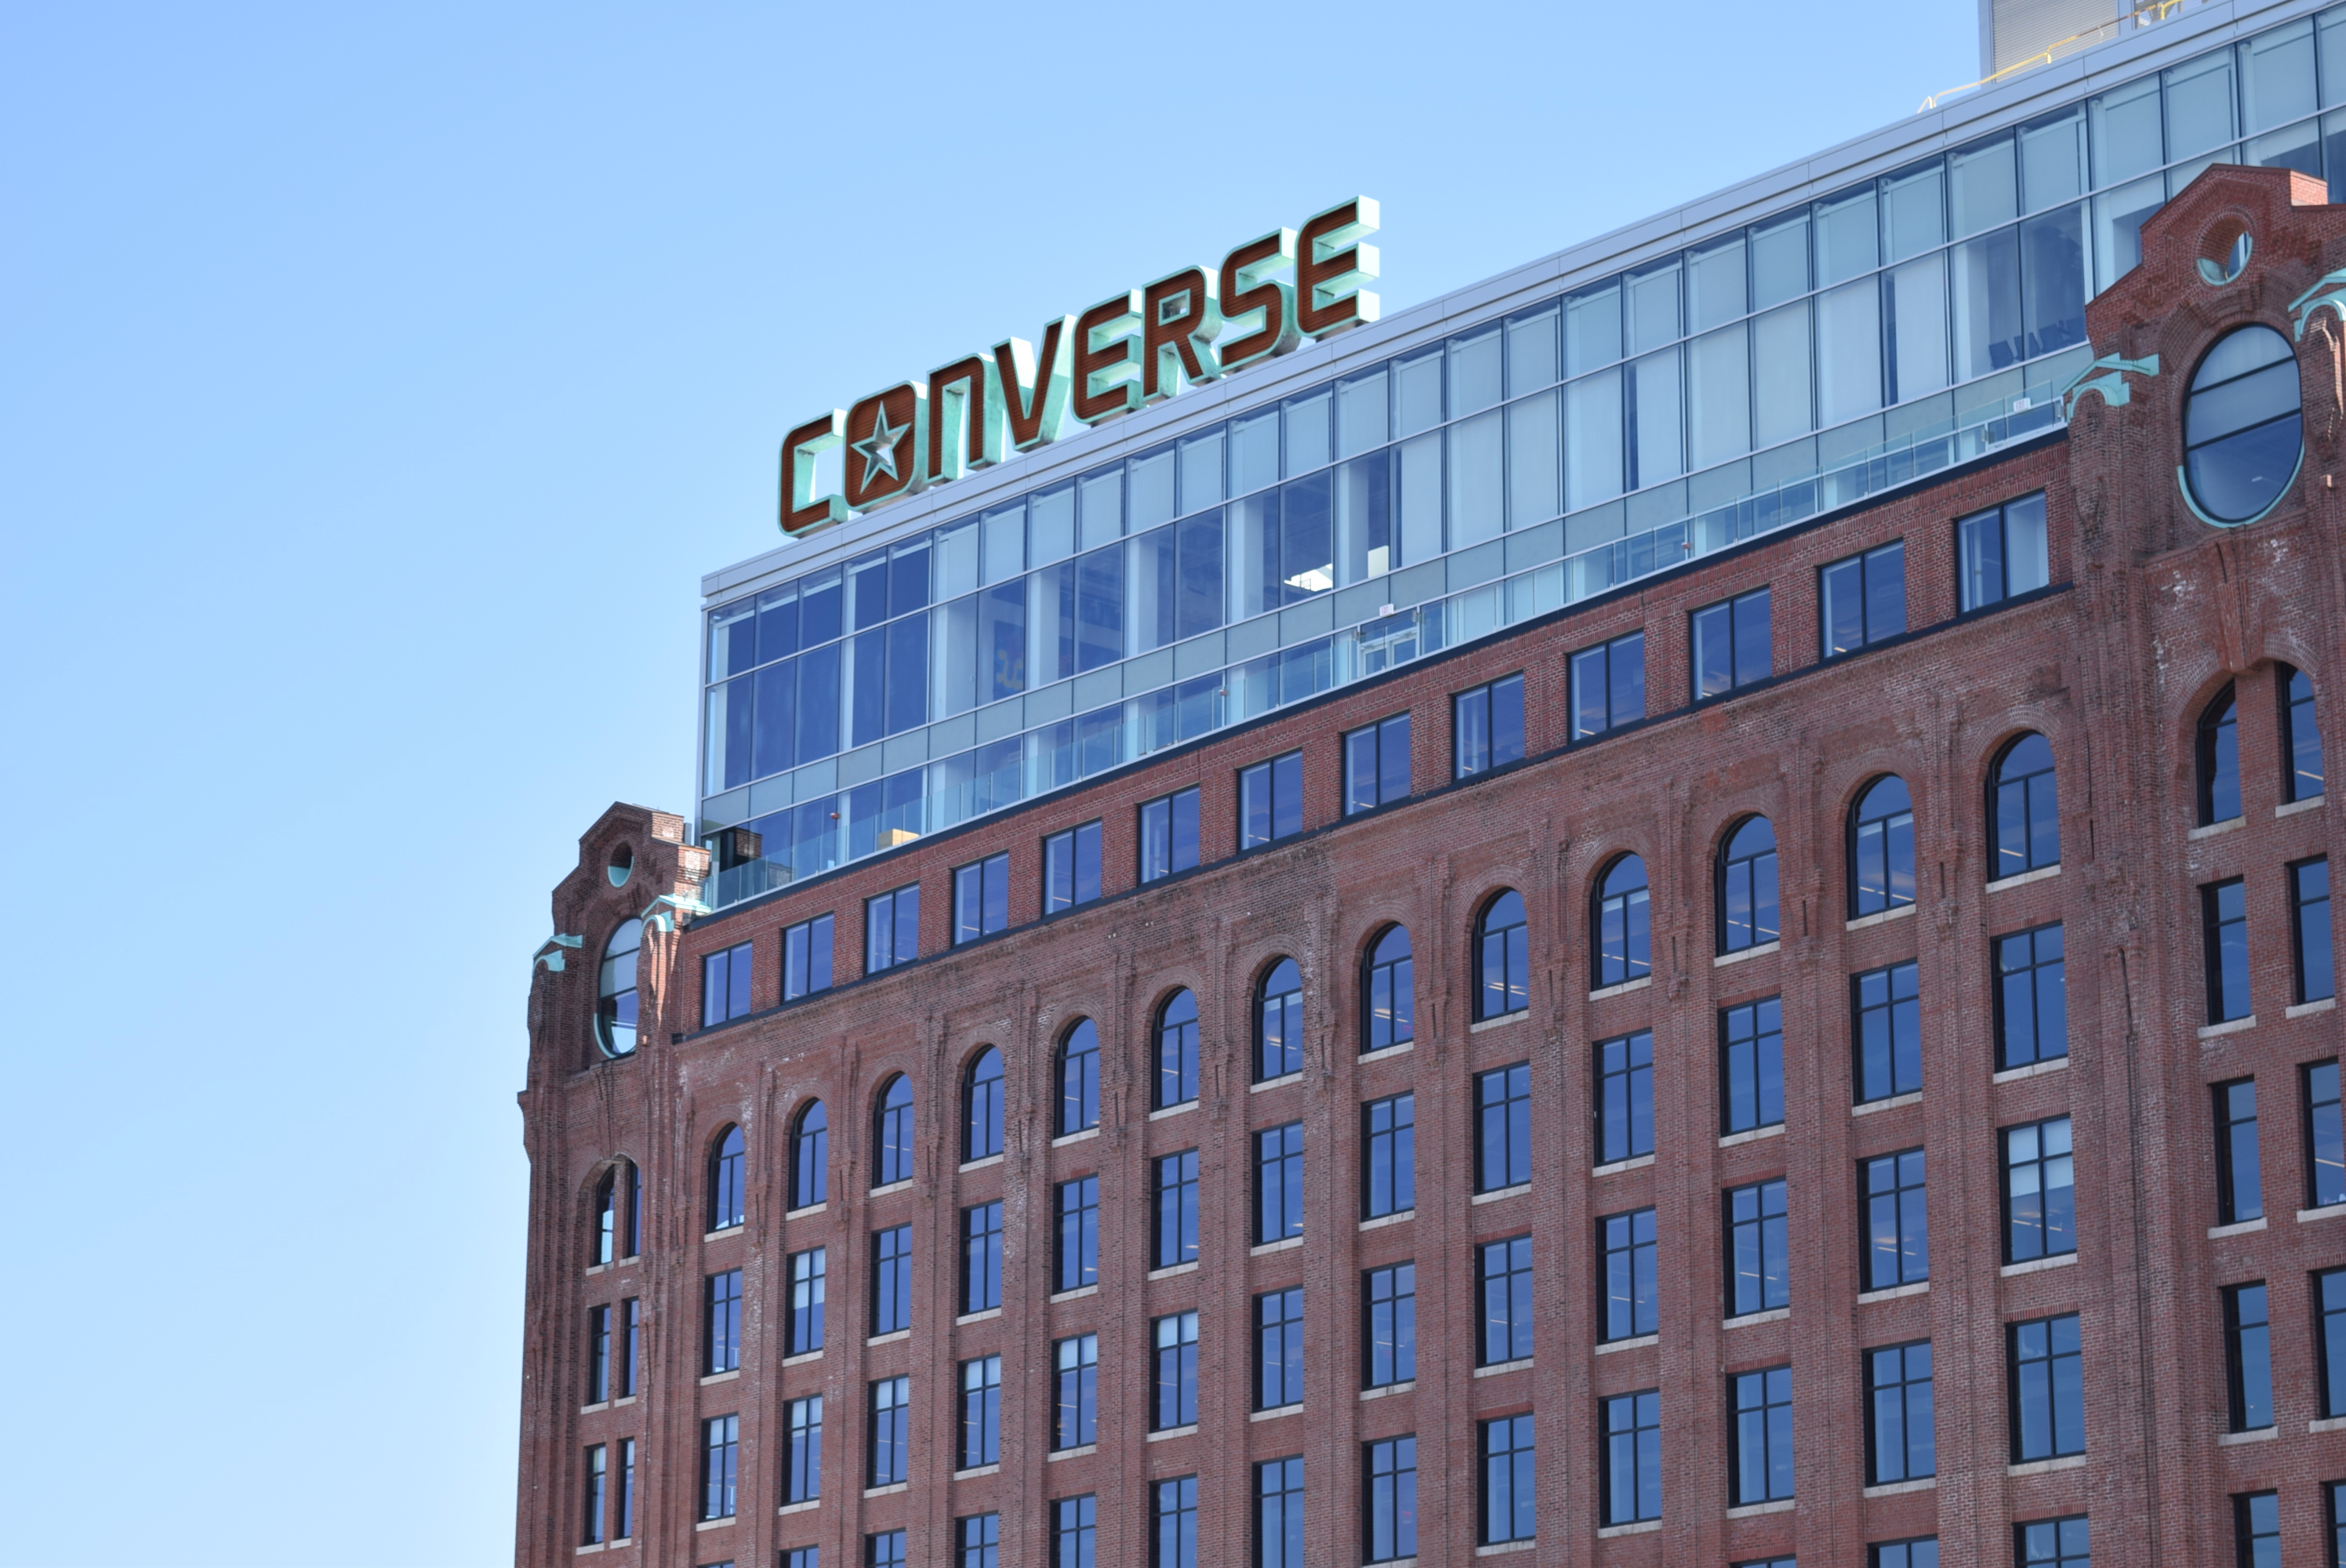 Converse Corporate Office Headquarters & Customer Service Info